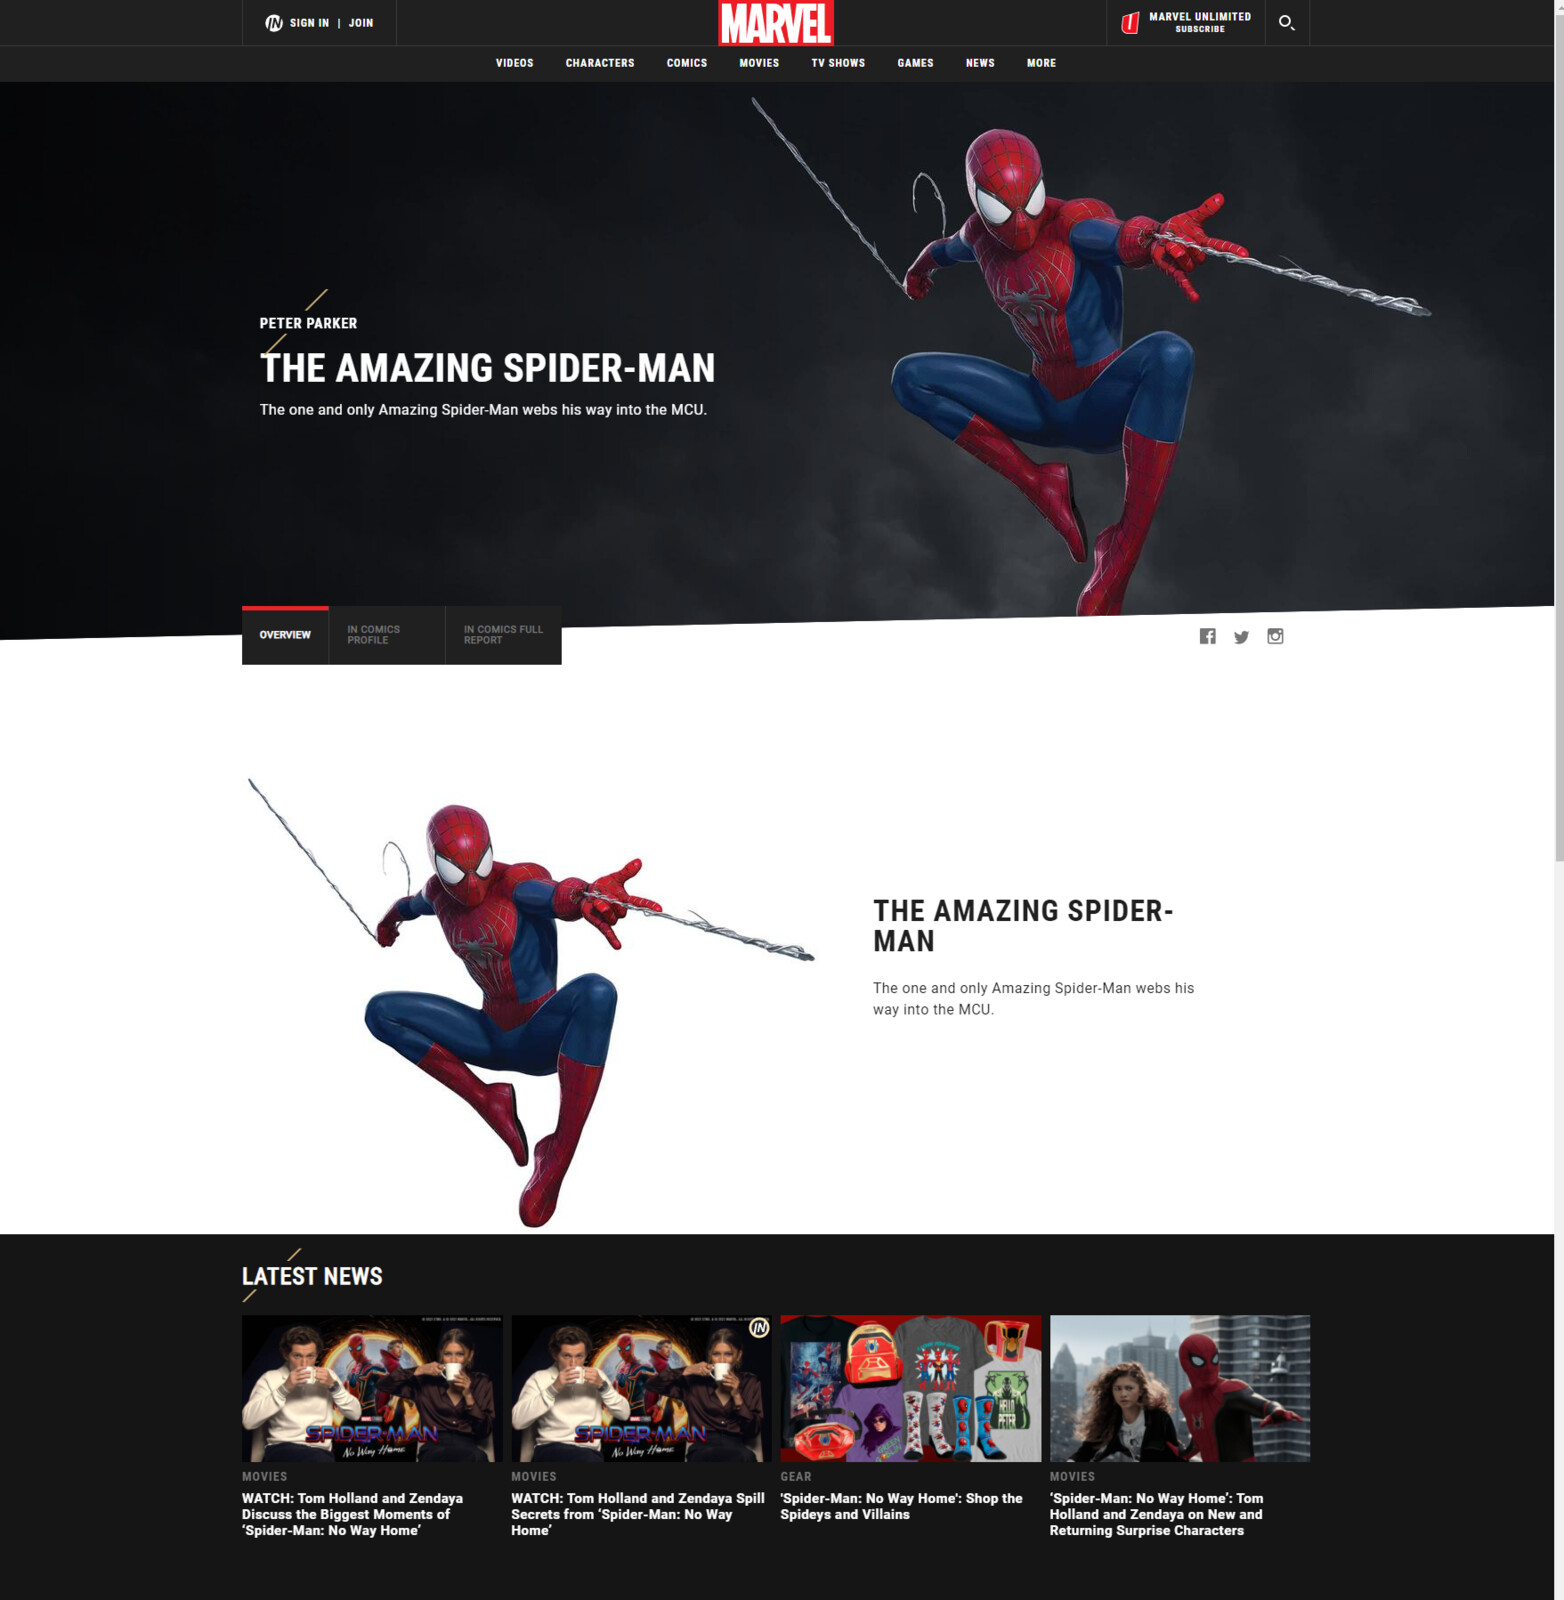 Marvel's website